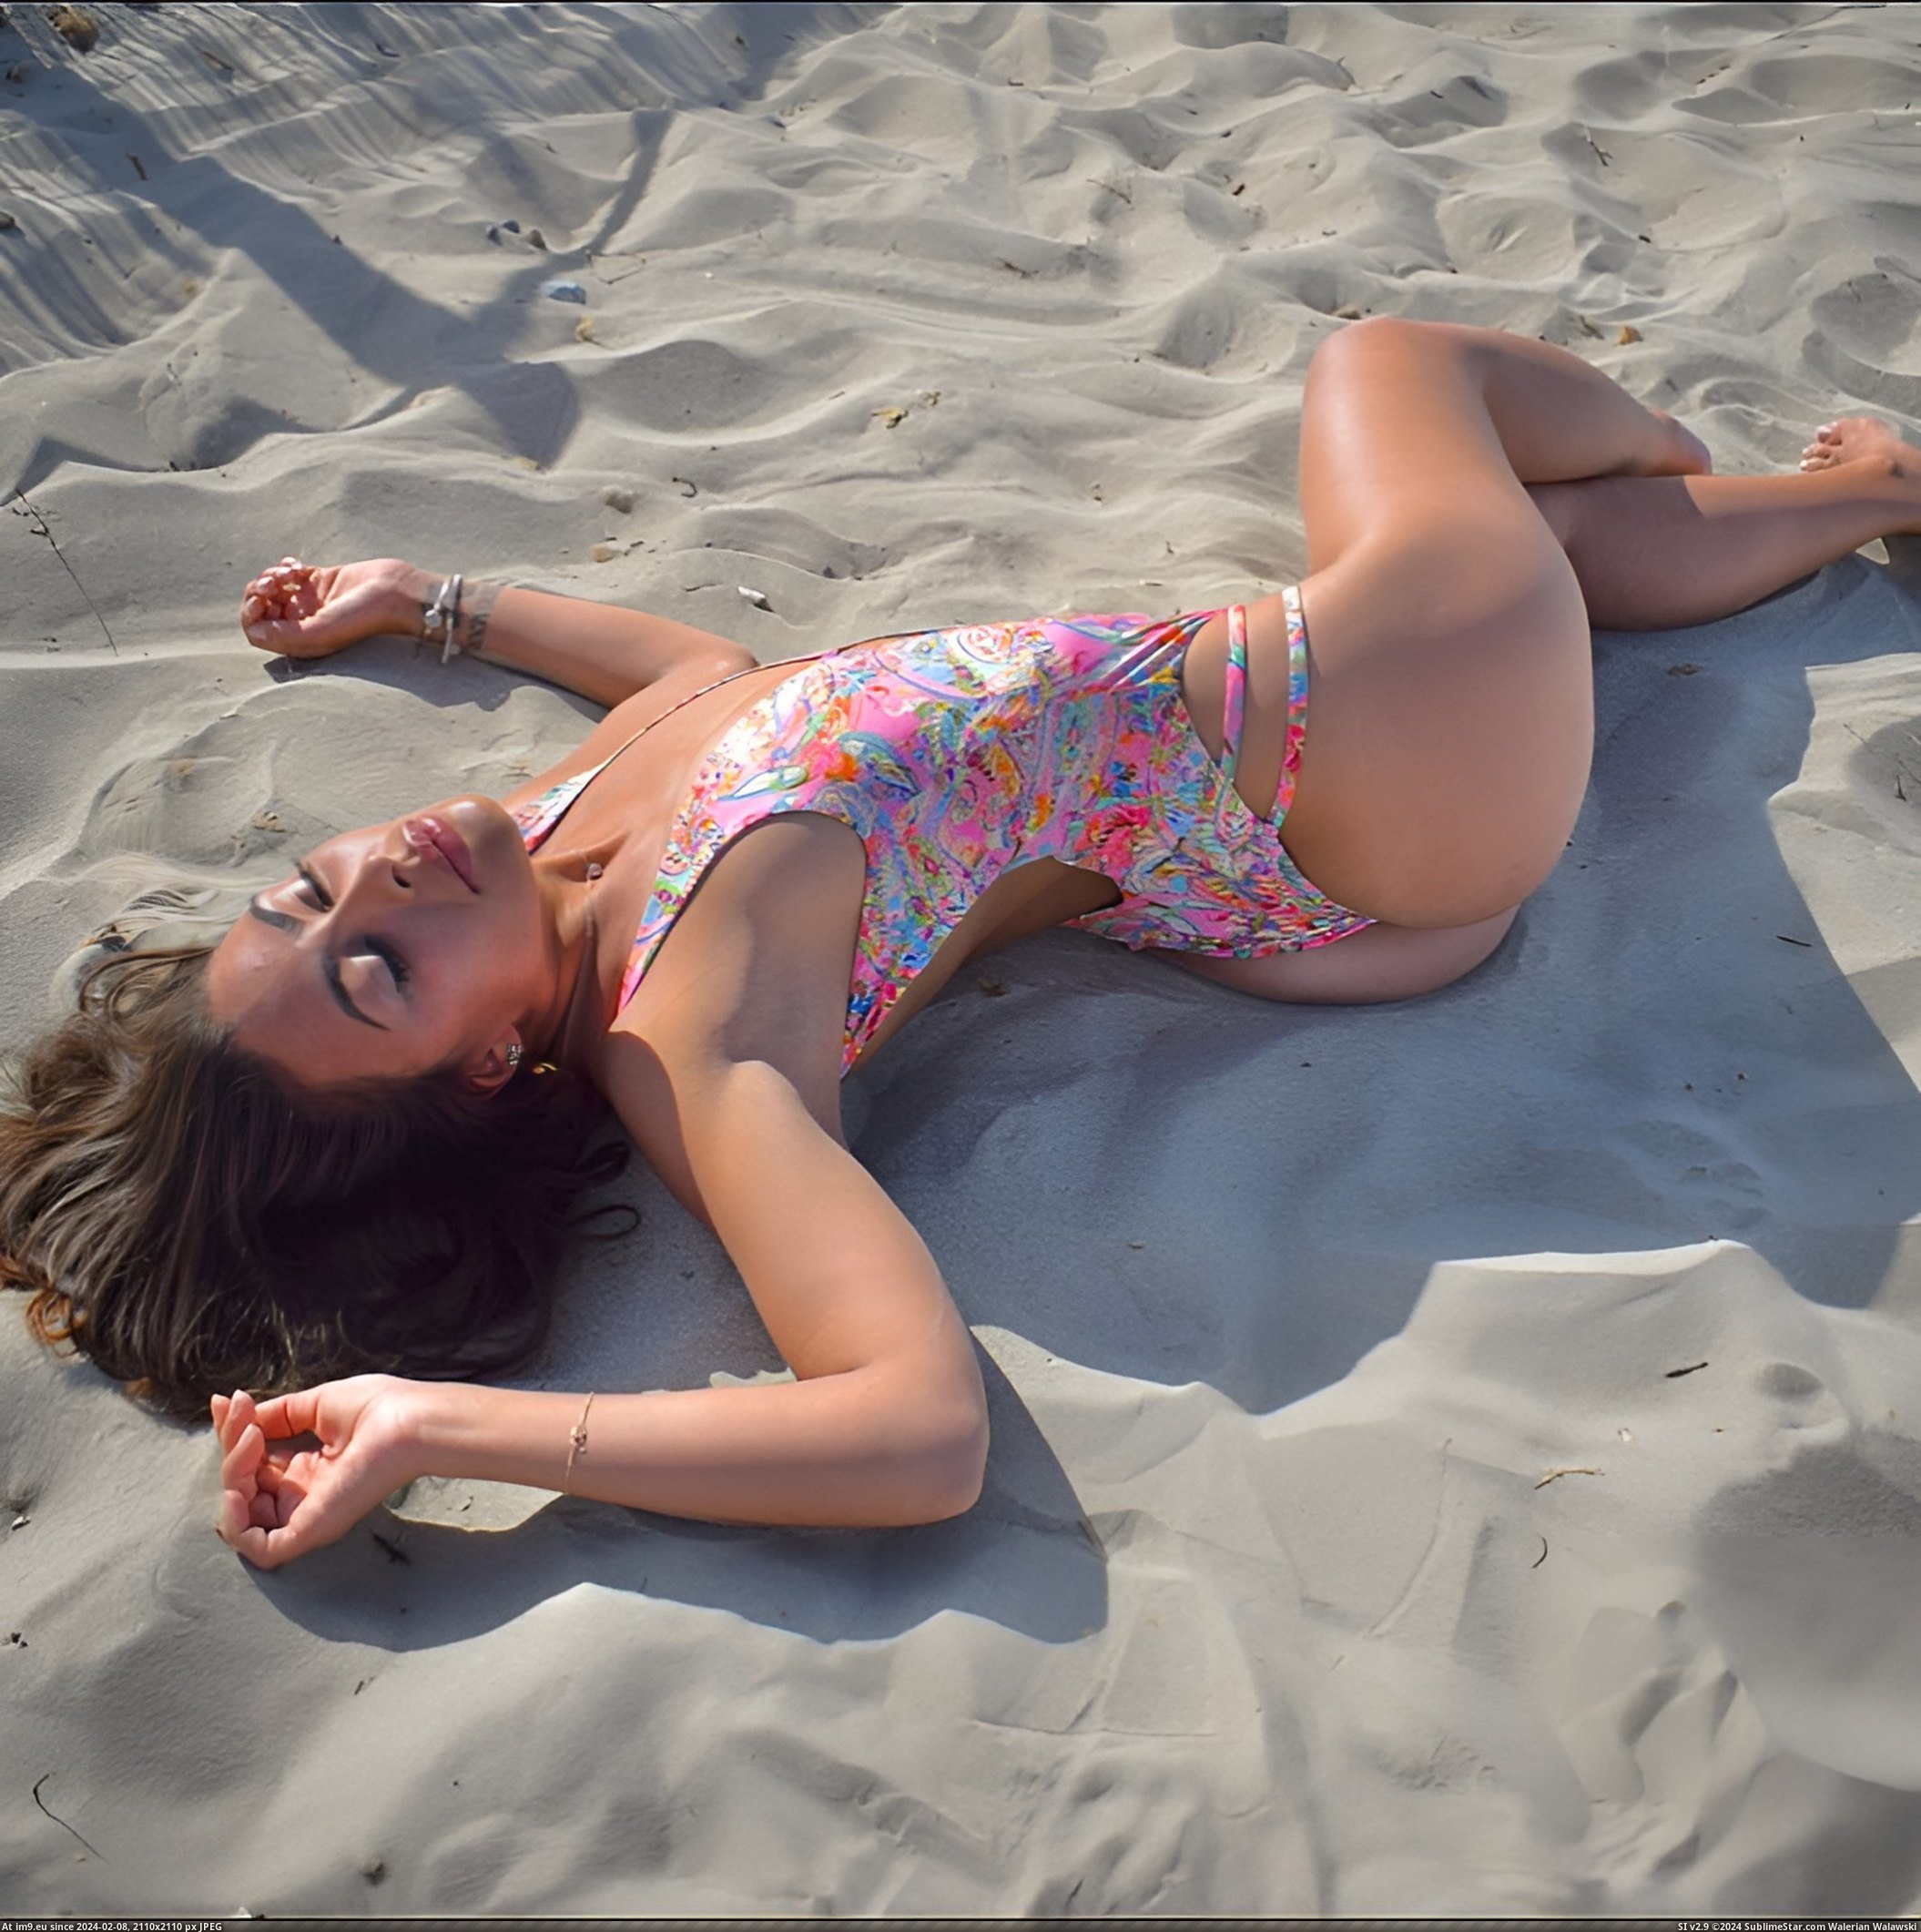 #Hot #Sexy #Tits #Amateur #Bitch #Sluts #Girlfriends #Cury #Ass #Beach #Face #Legs Beach Girl Pic. (Image of album Instant Upload))